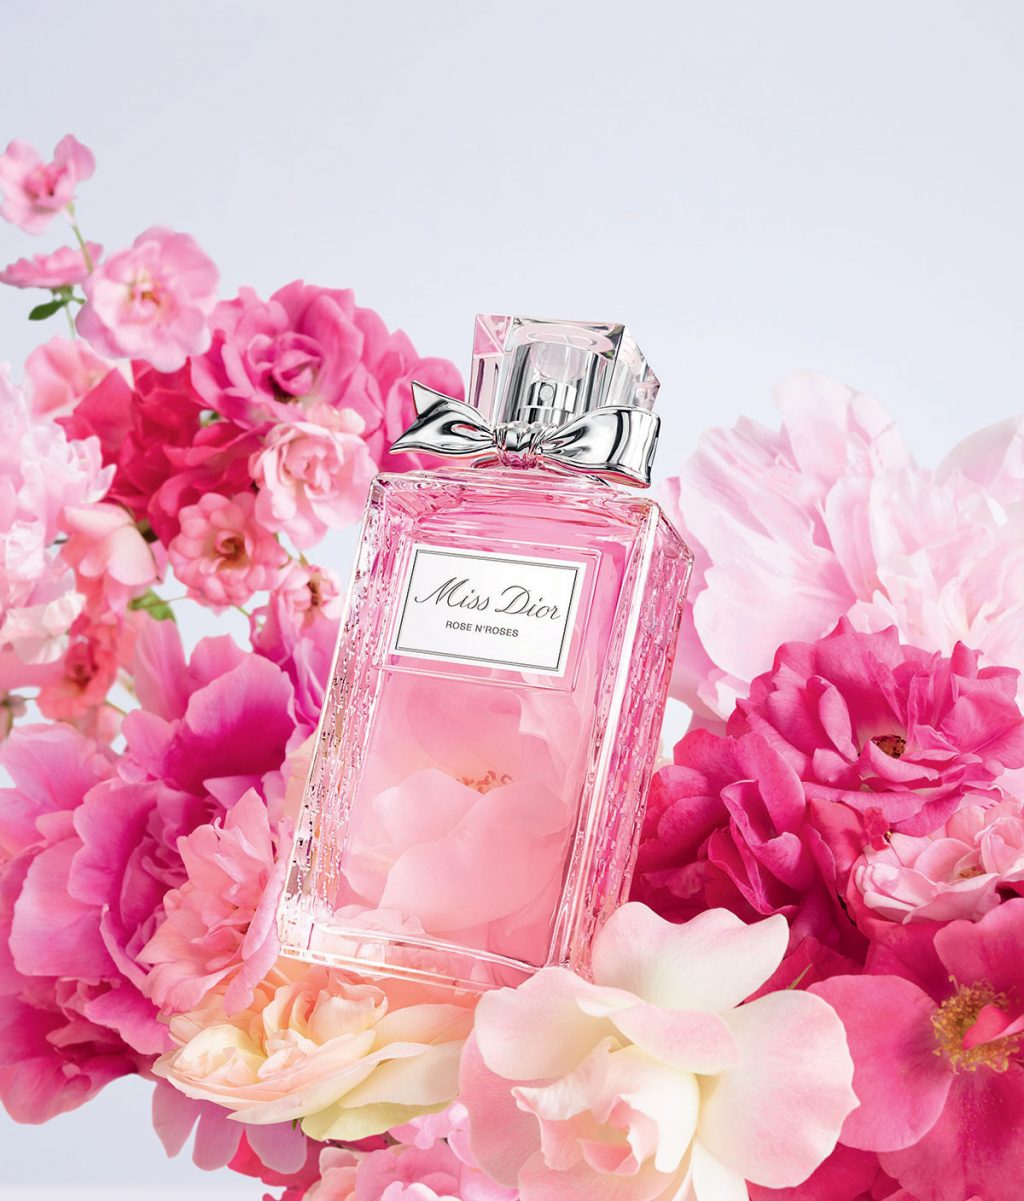 Miss Dior Rose N'Roses nước hoa dịu ngọt.